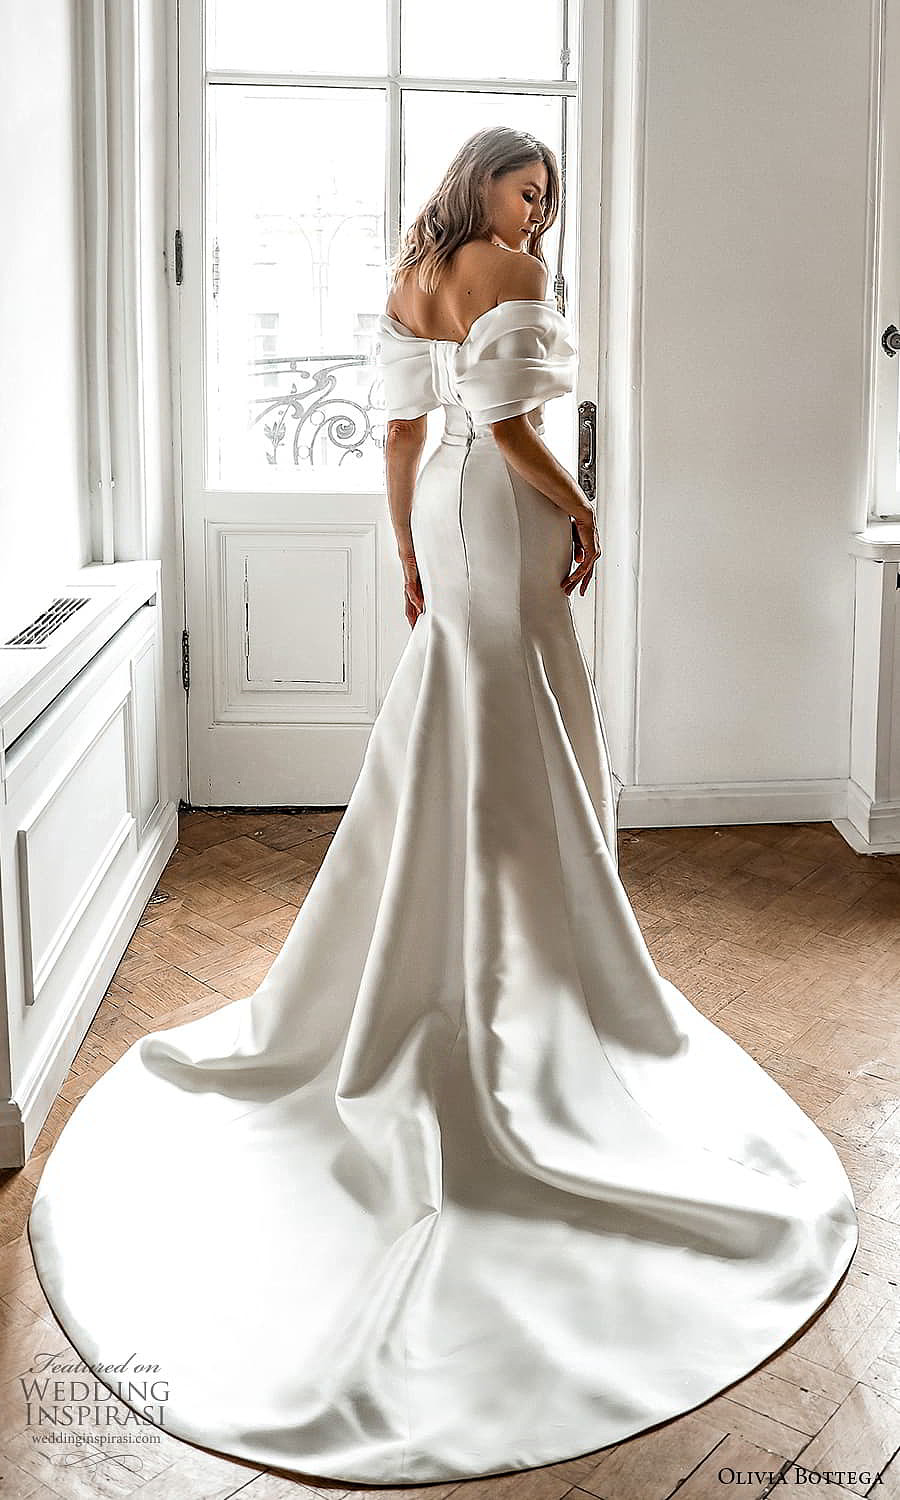 Olivia Bottega Pret-a-Porter 新娘系列 优雅百搭新娘嫁衣 - 28